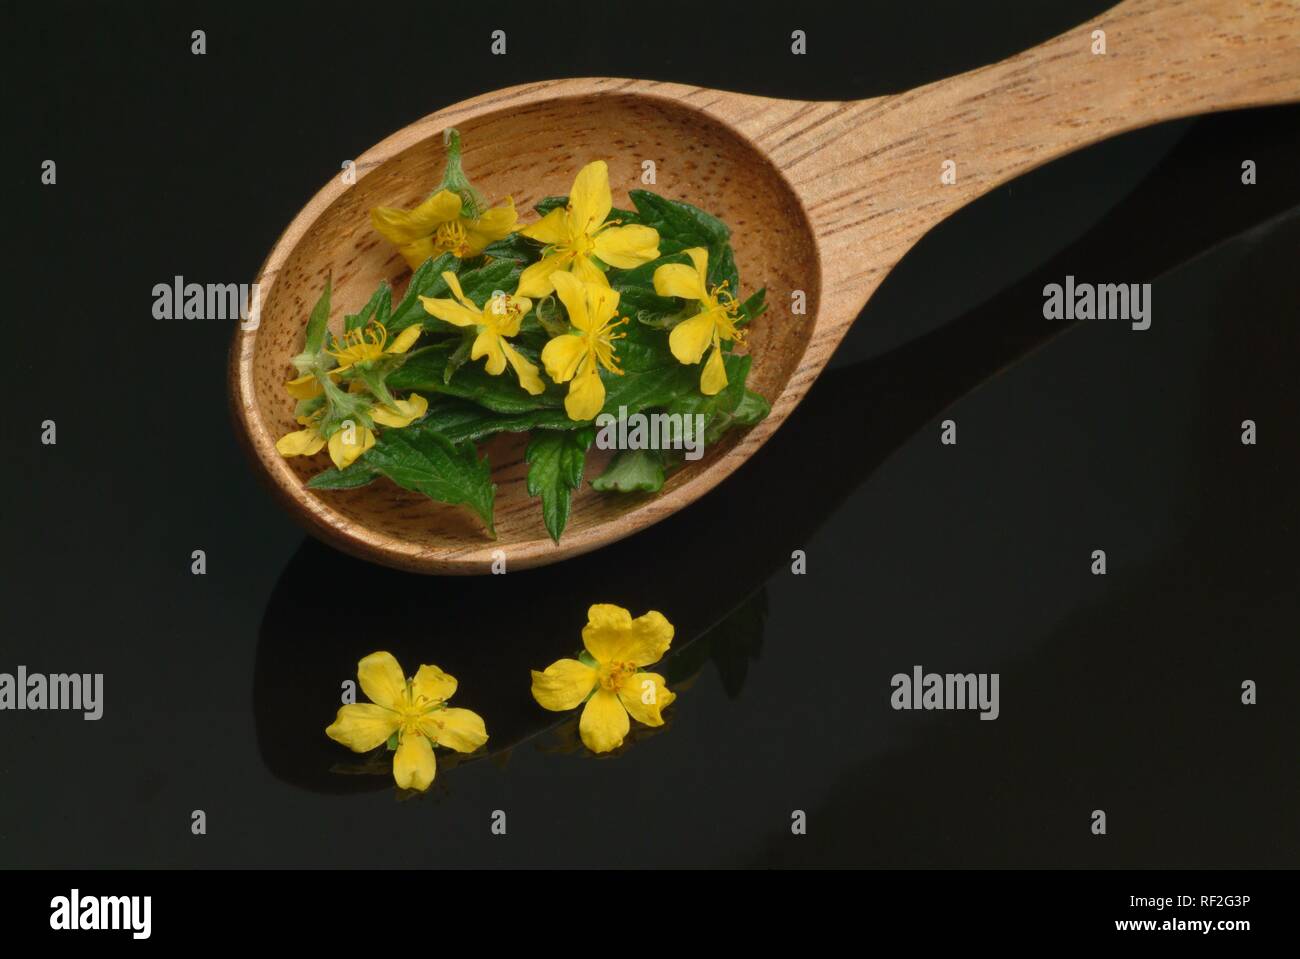 Common Agrimony, Church Steeples or Sticklewort (Agrimonia eupatoria), medicinal herb Stock Photo